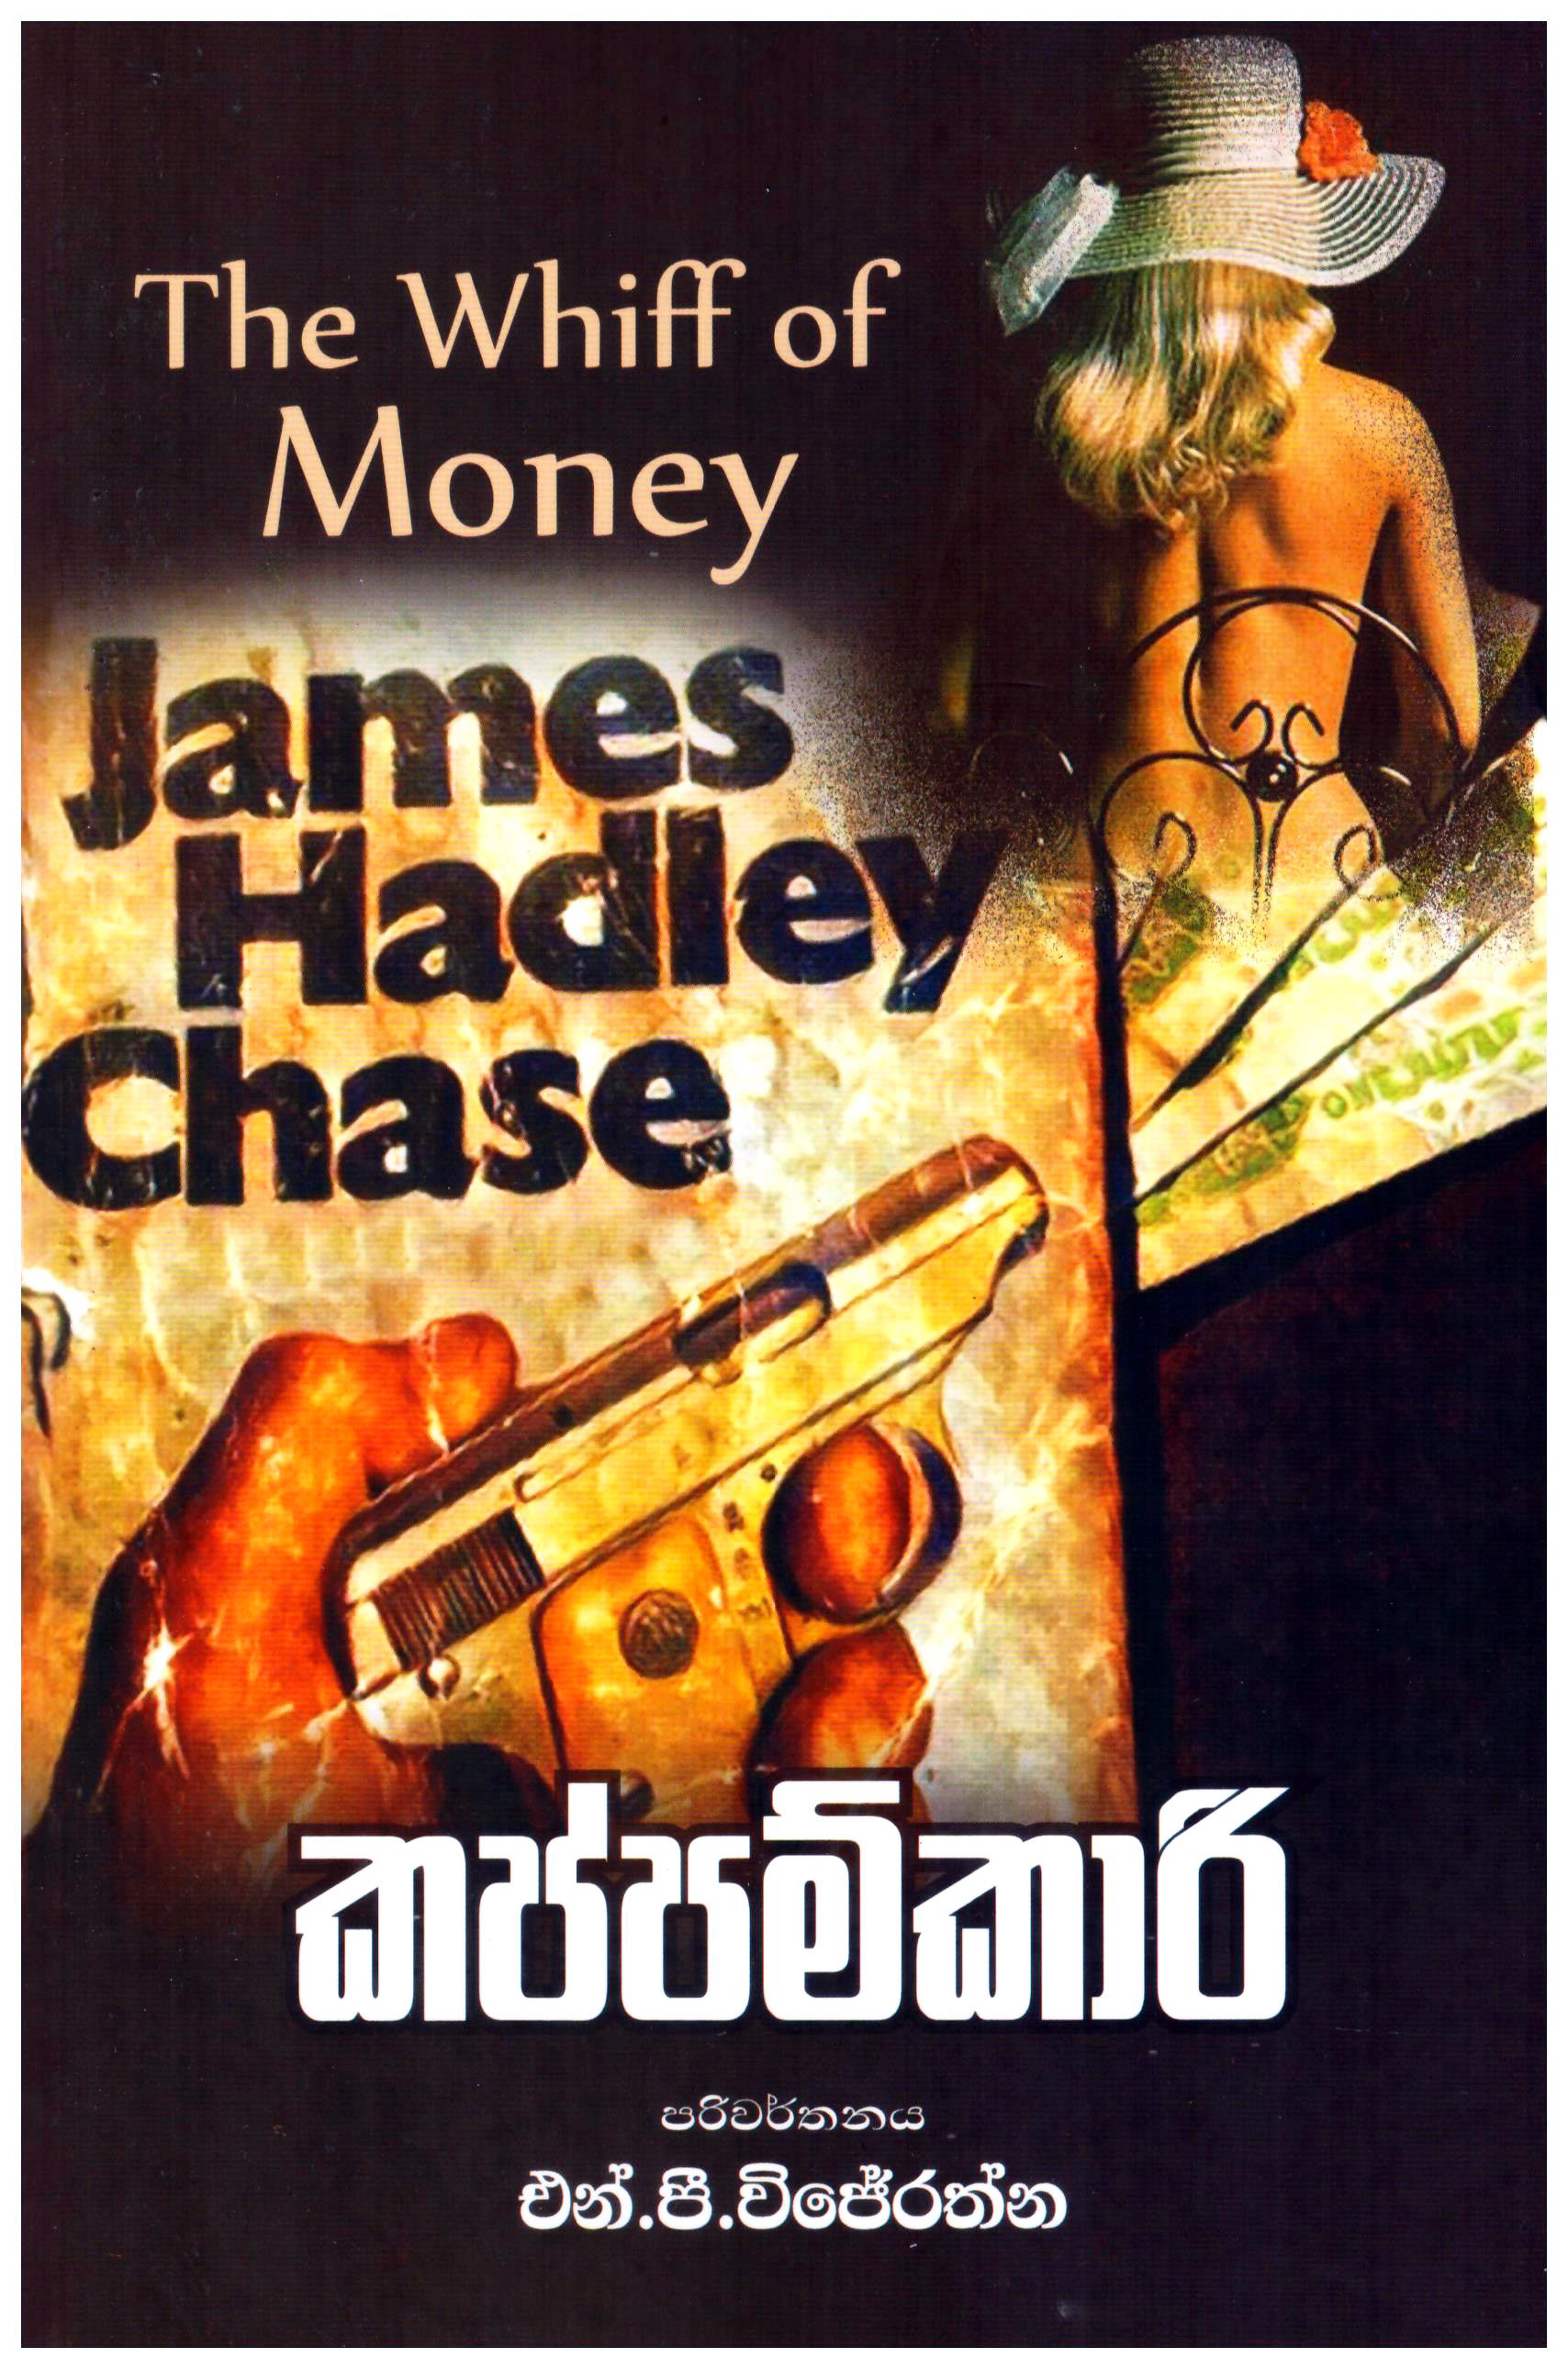 Kappamkari - Translations of The Whiff of Money by James Hadley Chase